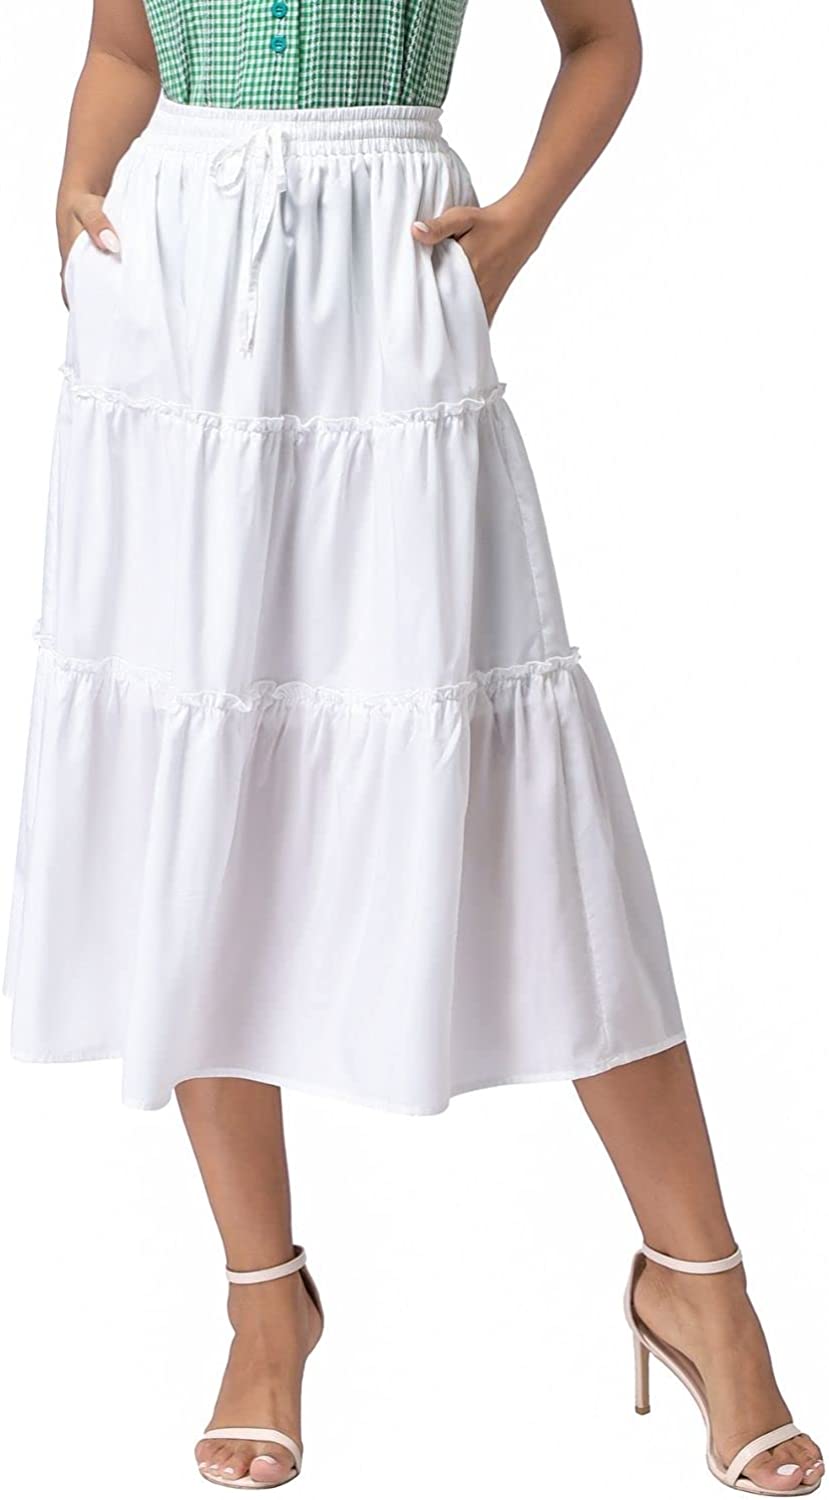 Women's Boho Elastic High Waist A Line Ruffle Swing Beach Maxi Skirt with Pockets